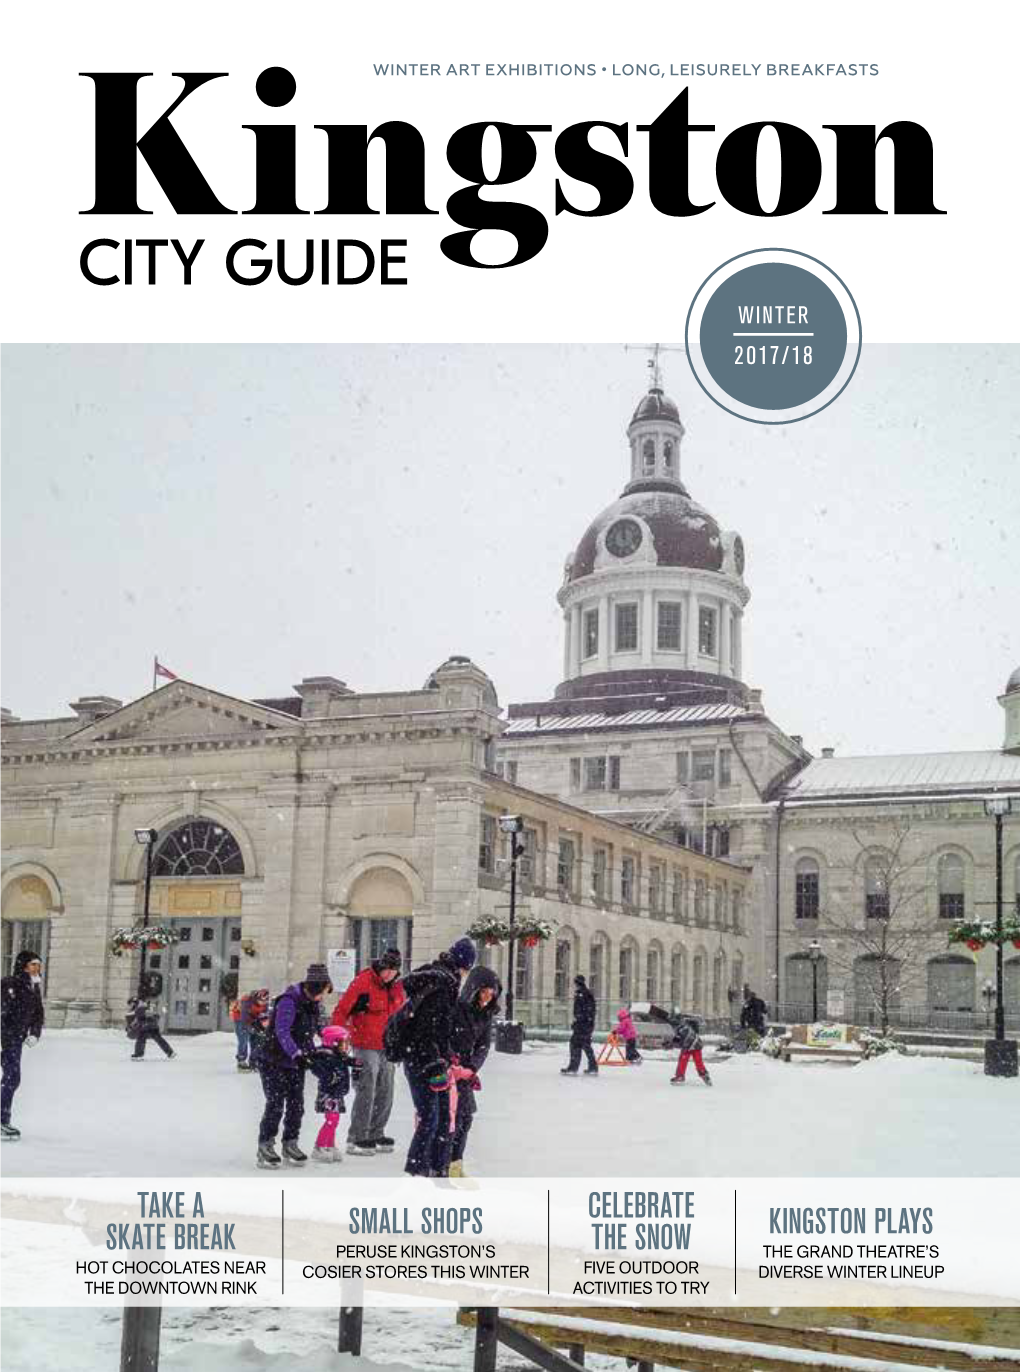 City Guide Winter 2017/18